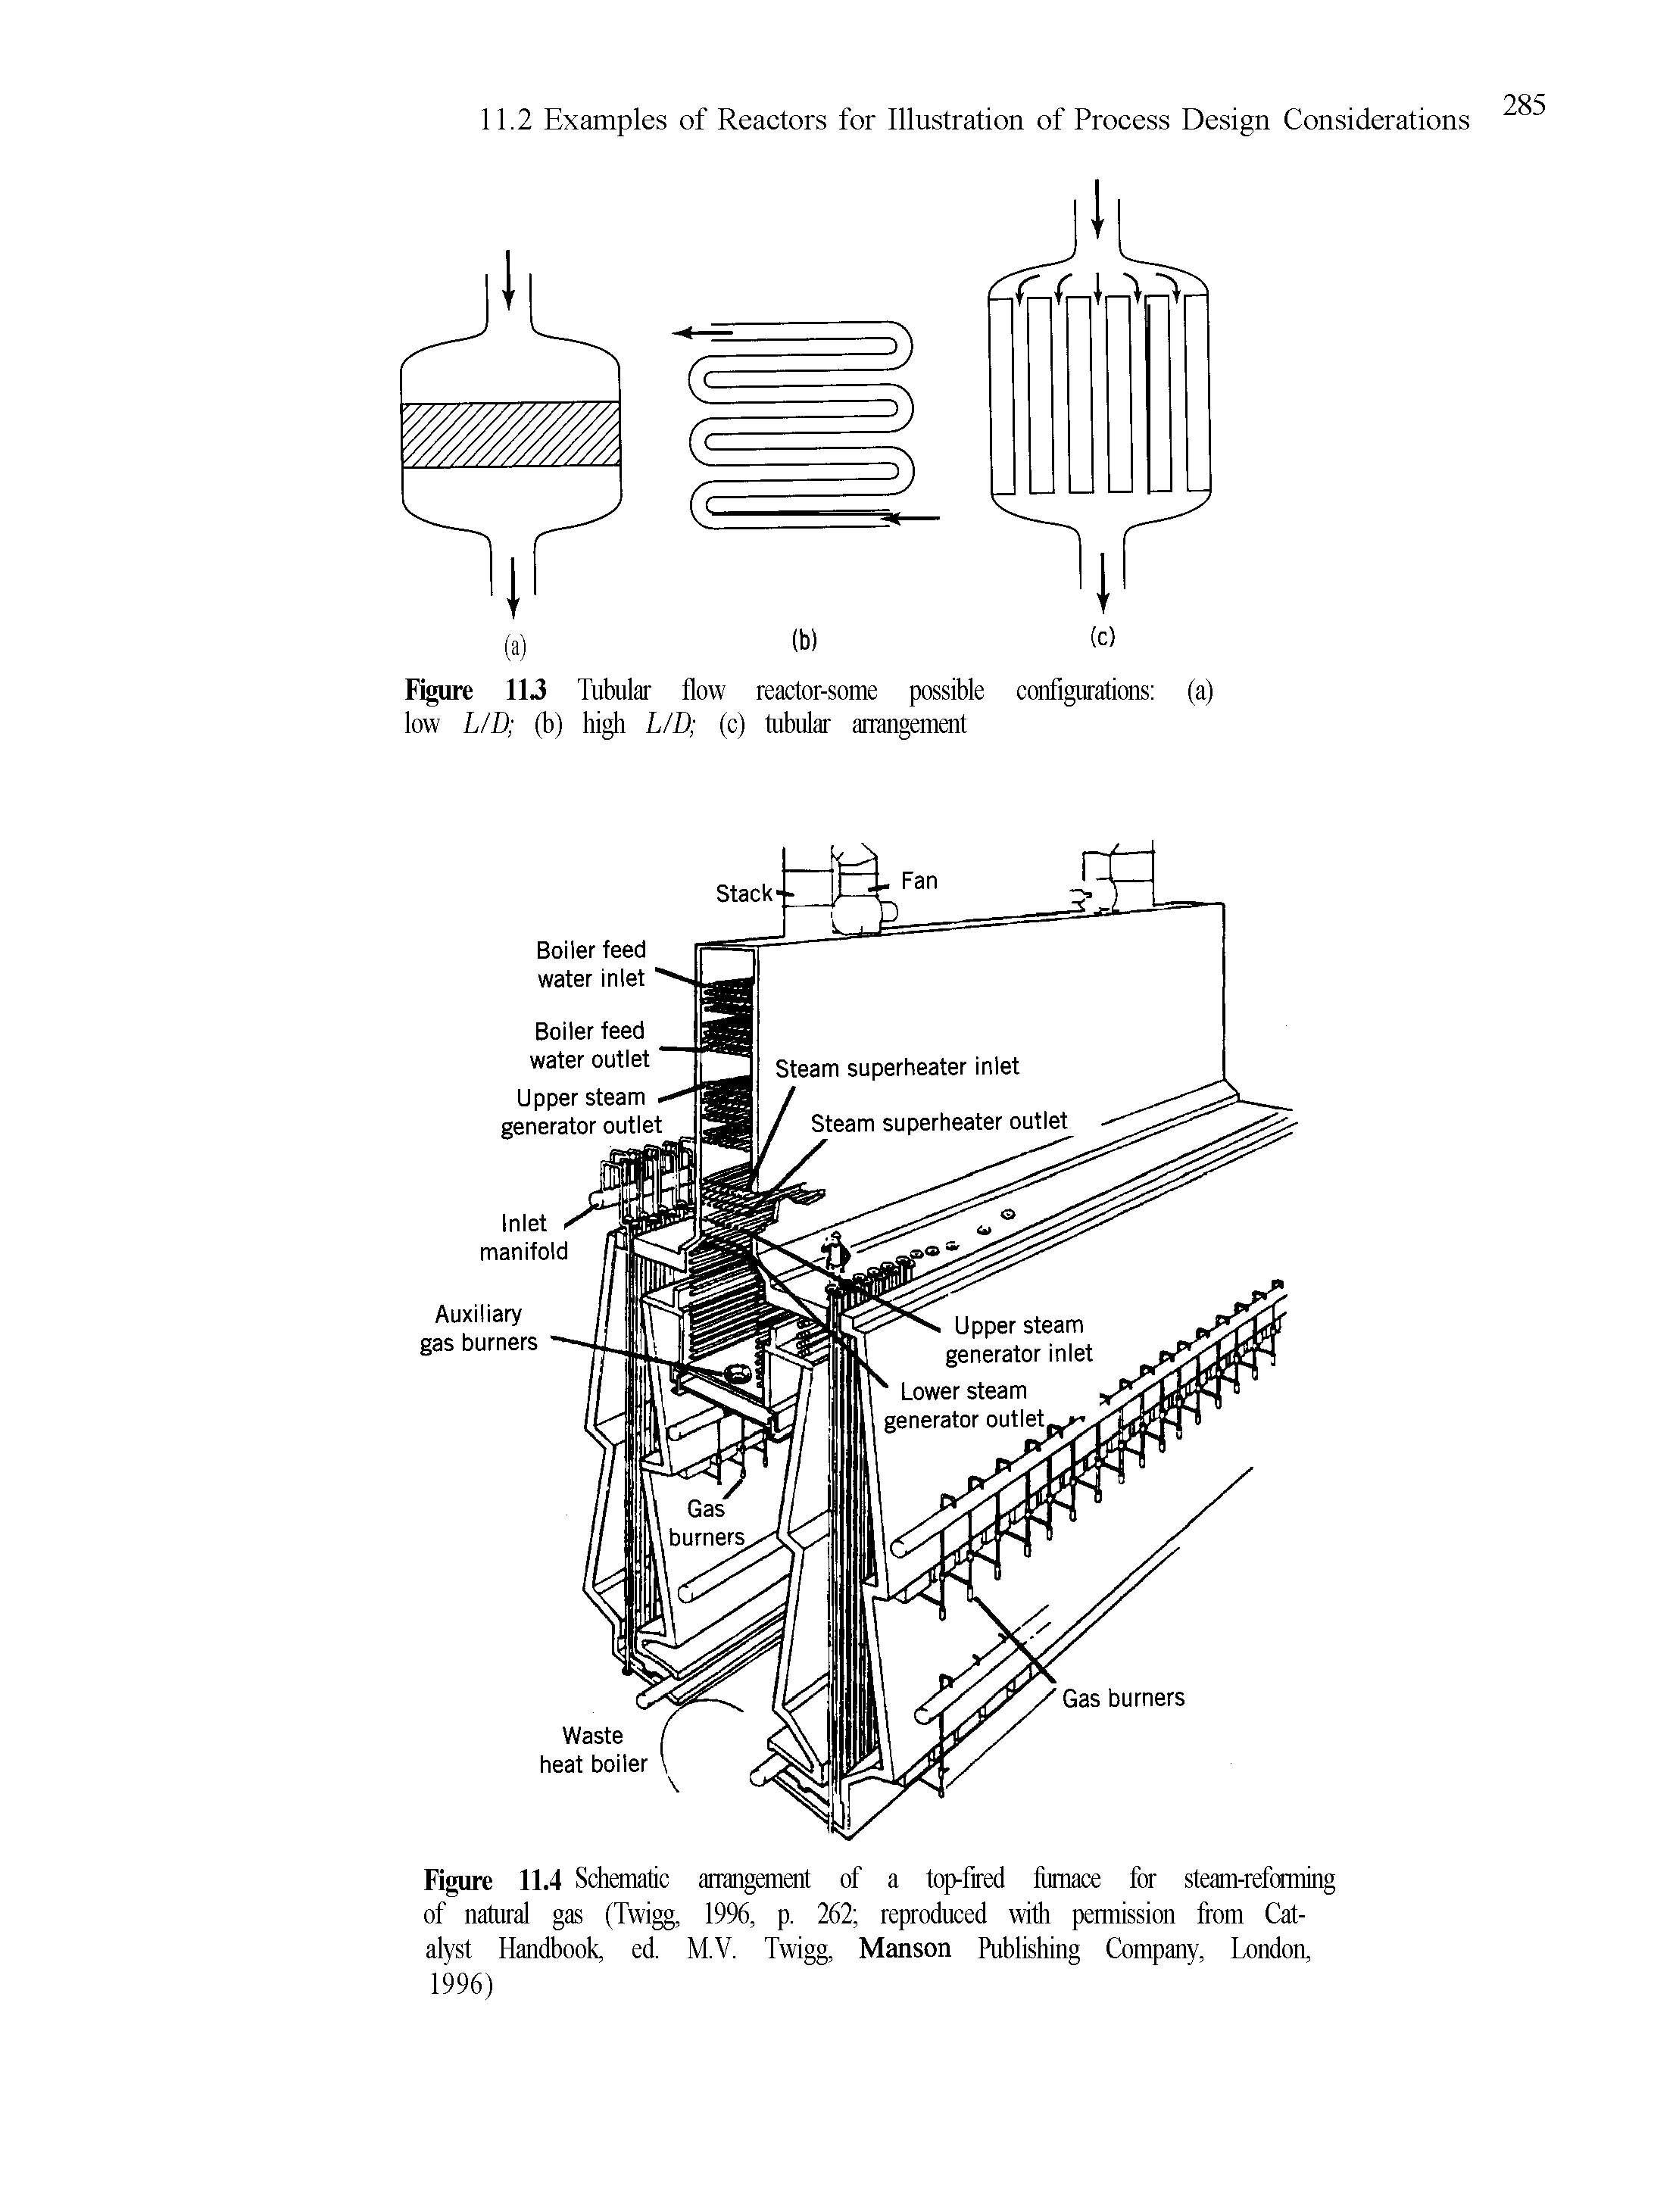 Figure 11.3 Tubular flow reactor-some possible configurations (a) low LID (b) high LID (c) tubular arrangement...